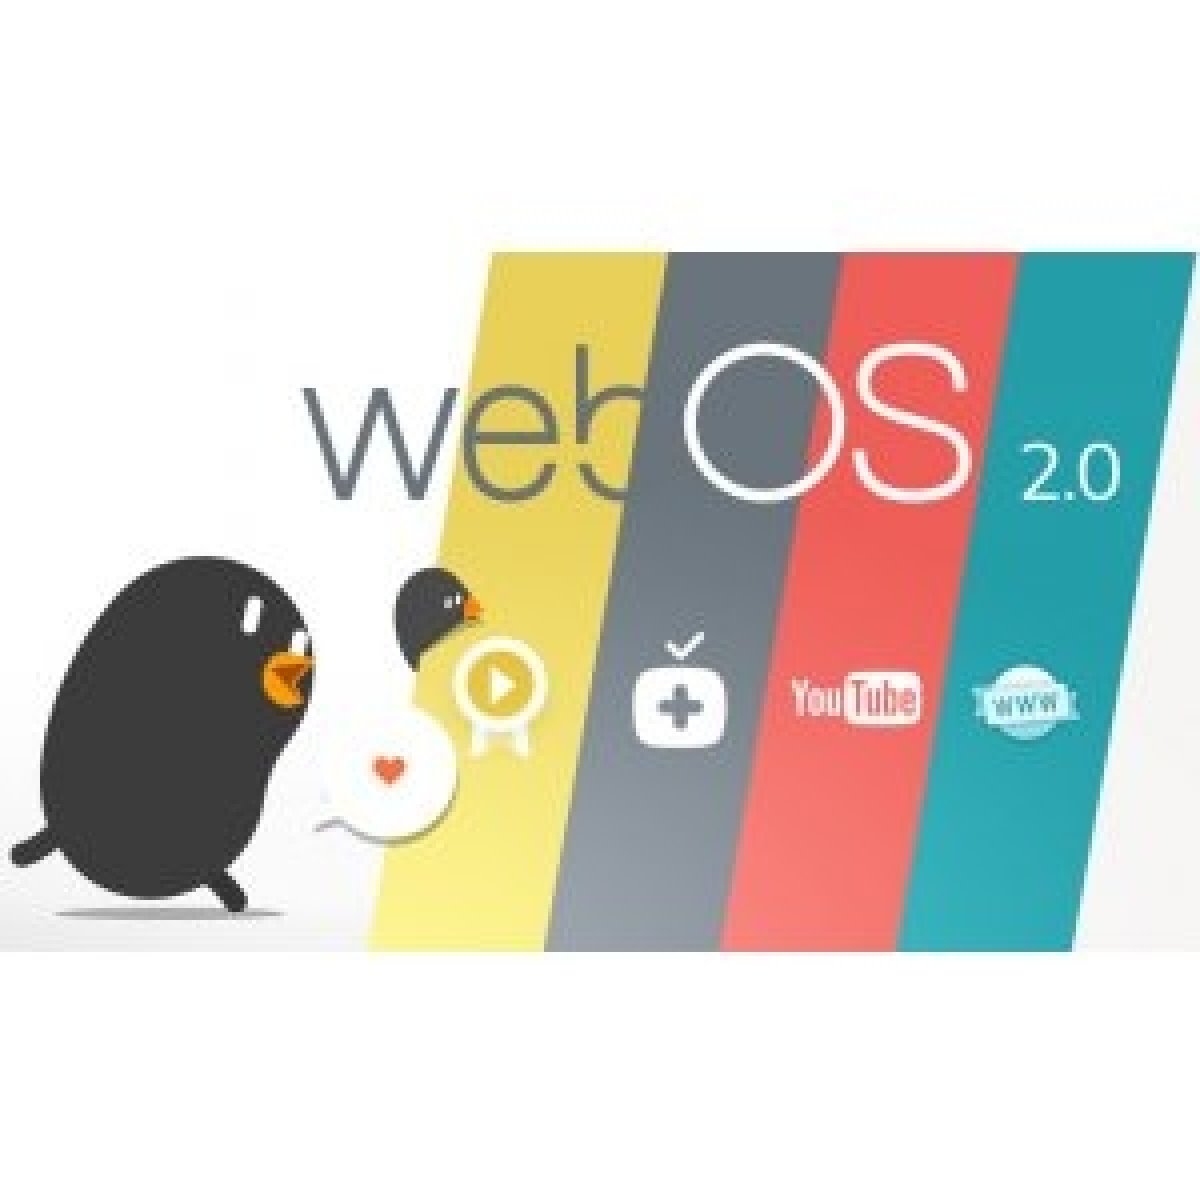 Zábavná platforma LG webOS 2.0